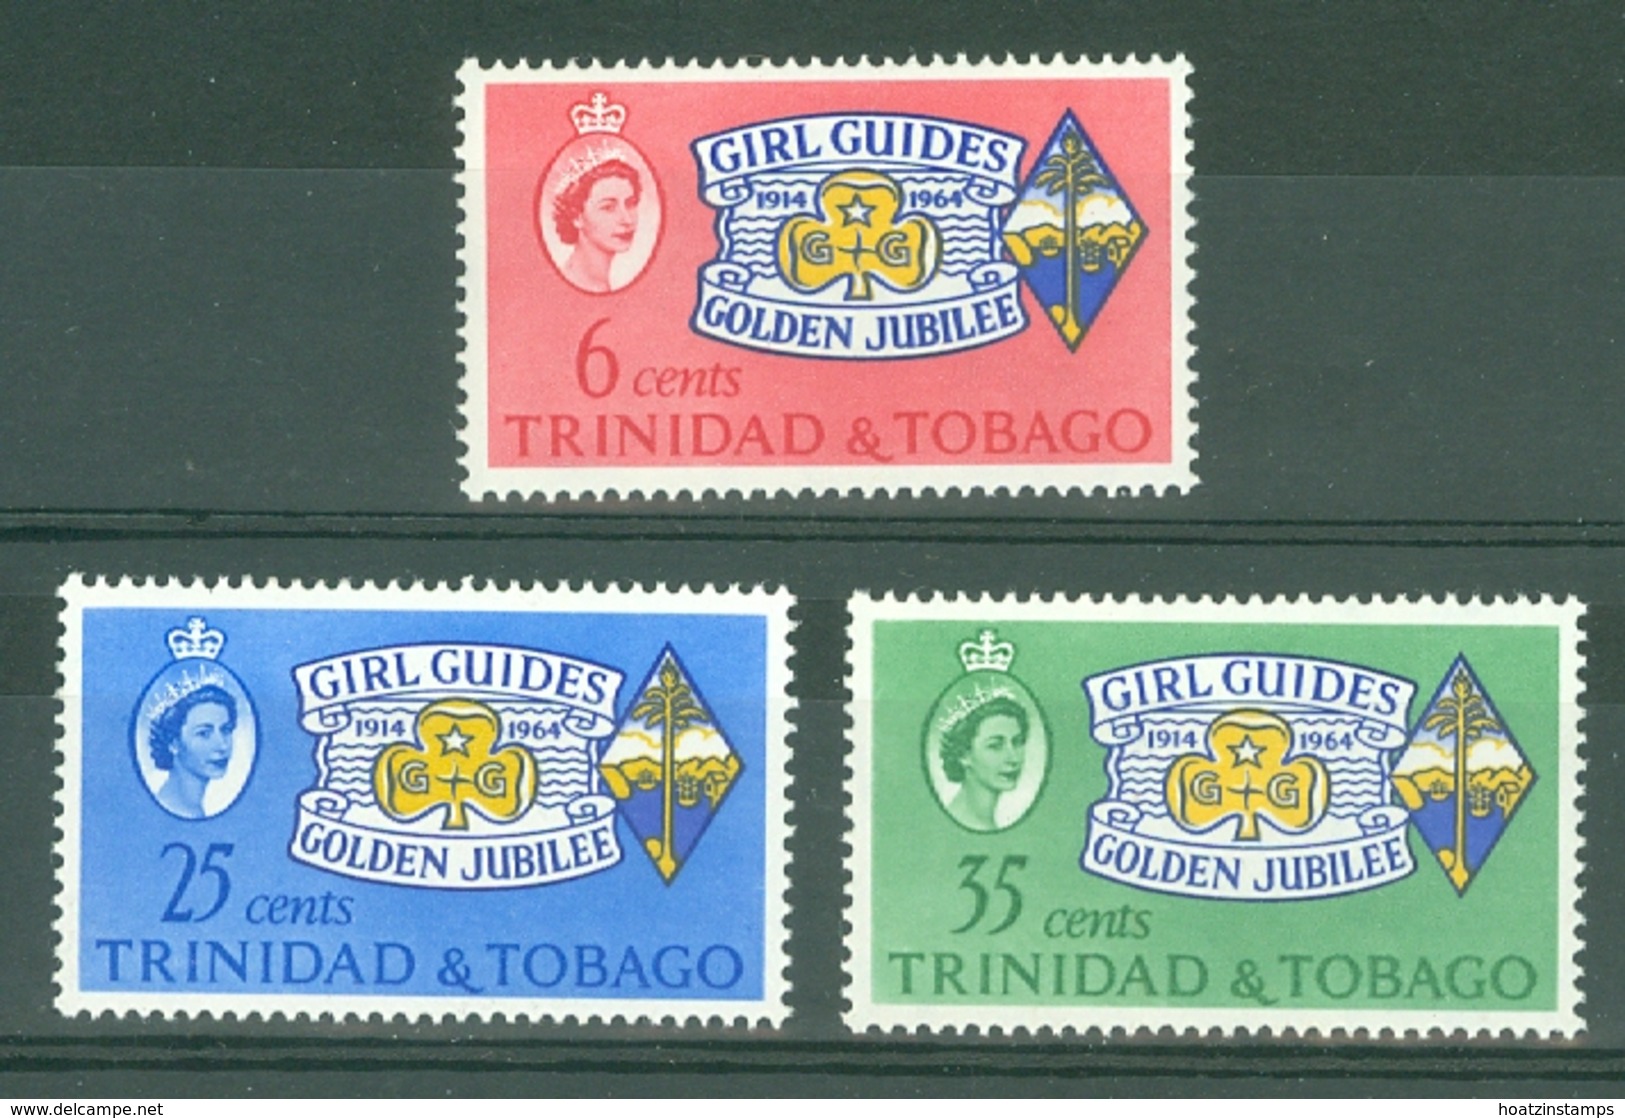 Trinidad & Tobago: 1964   Golden Jubilee Of Girl Guides Association     MH - Trinidad & Tobago (1962-...)